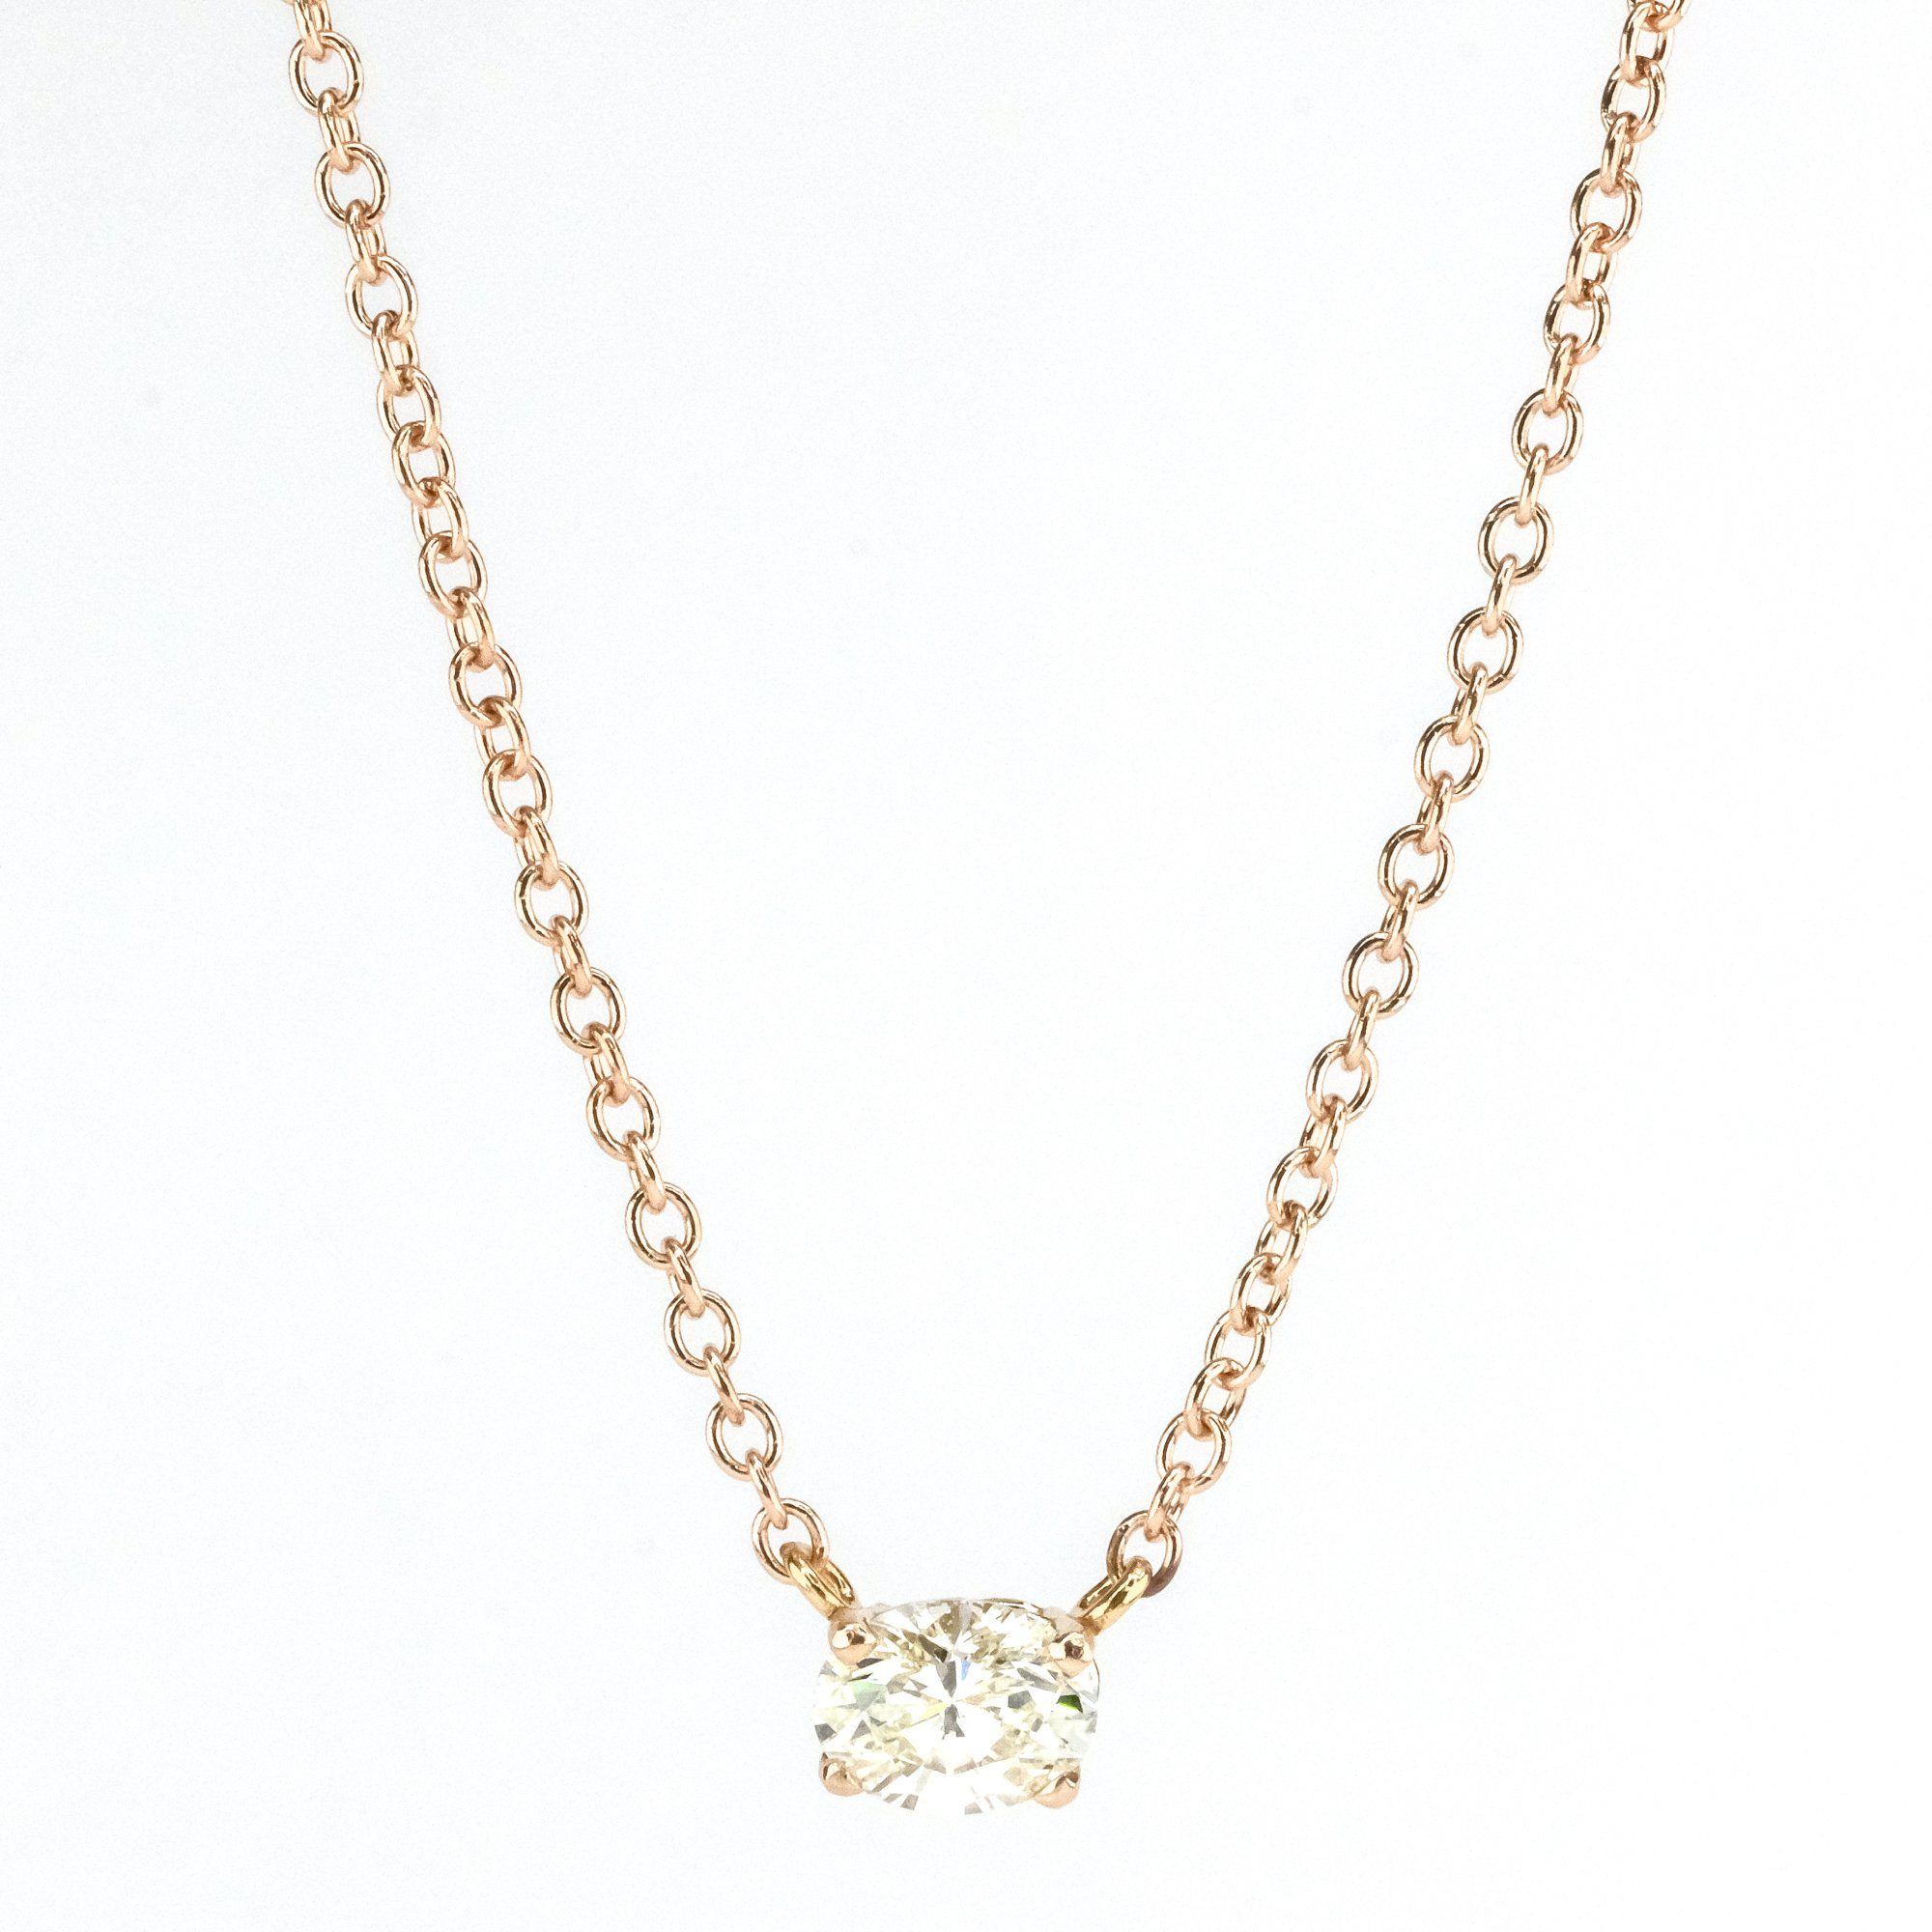 2 Ct Round Diamond Solitaire Bezel Set Pendant Necklace 14K Rose Gold  Finish | eBay